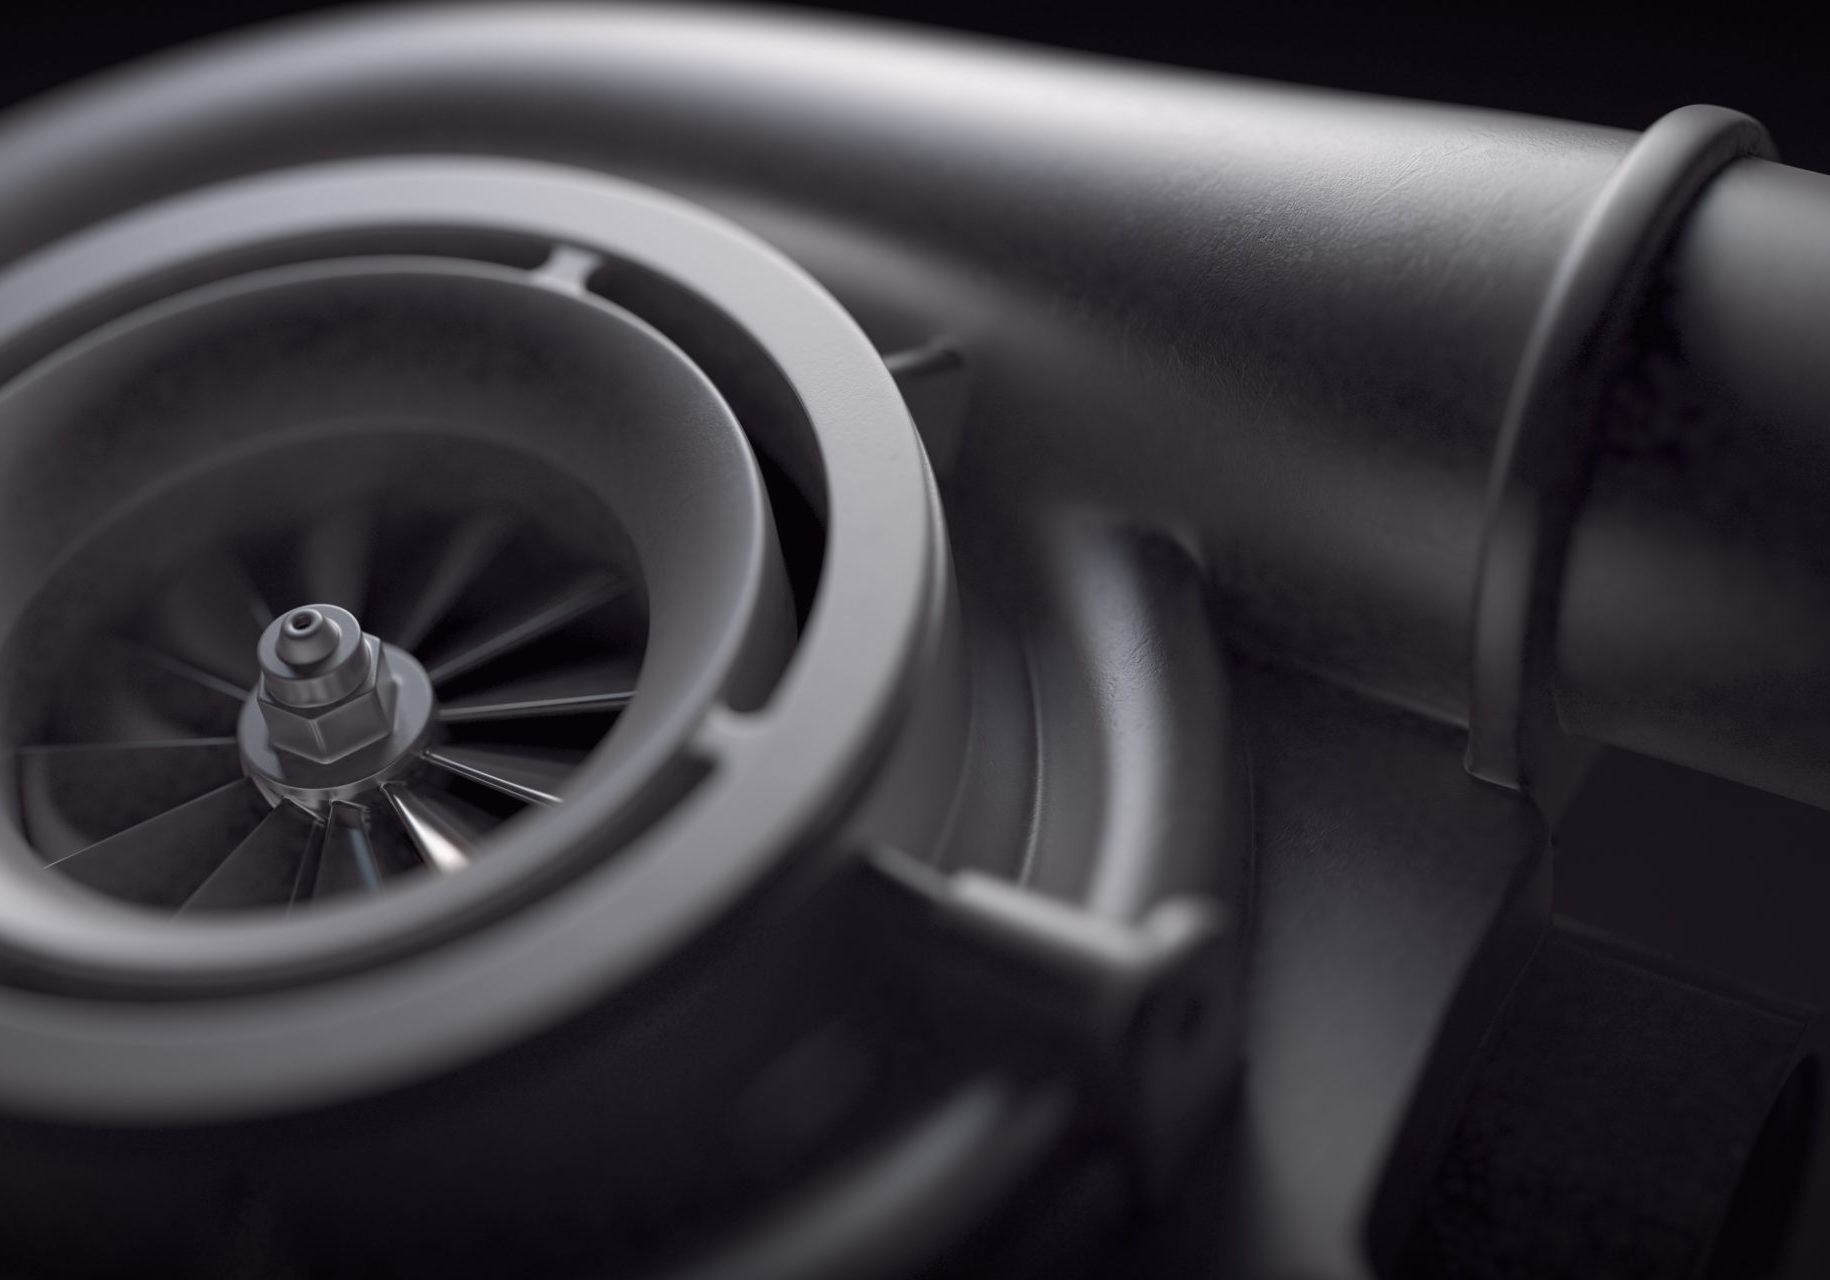 Car turbocharger on black background. Auto part turbo engine technology concept. 3d illustration